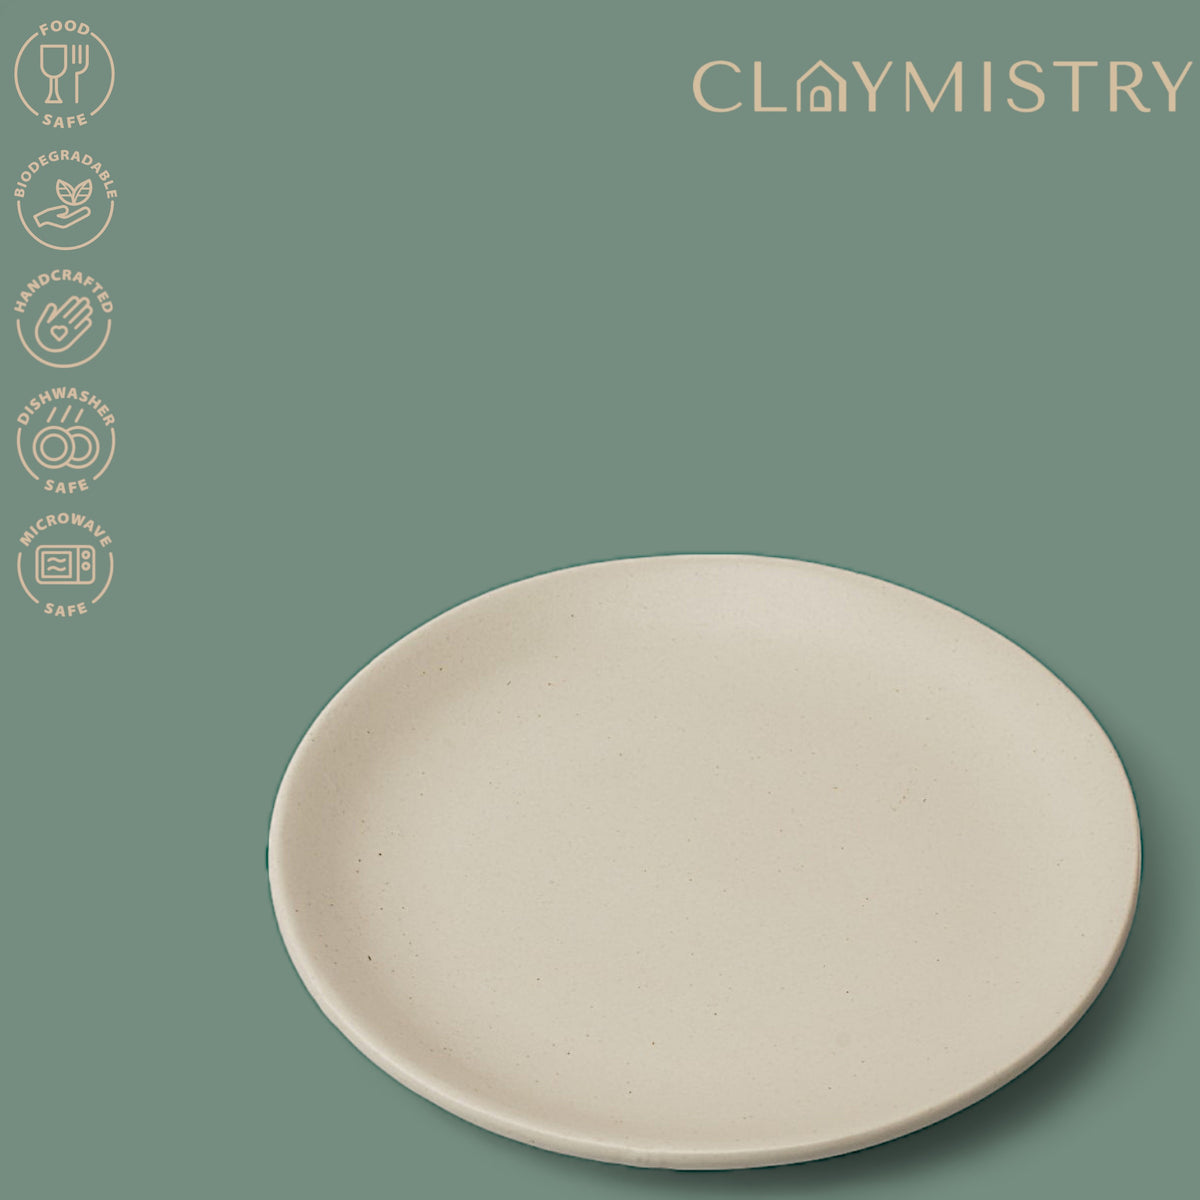 Claymistry Ceramic Dinner & Snacks Serving Plate | Glossy Finish | Dishwasher, Oven & Microwave Safe | Dinnerware Serving Plate Thali | Premium Kitchen Crockery